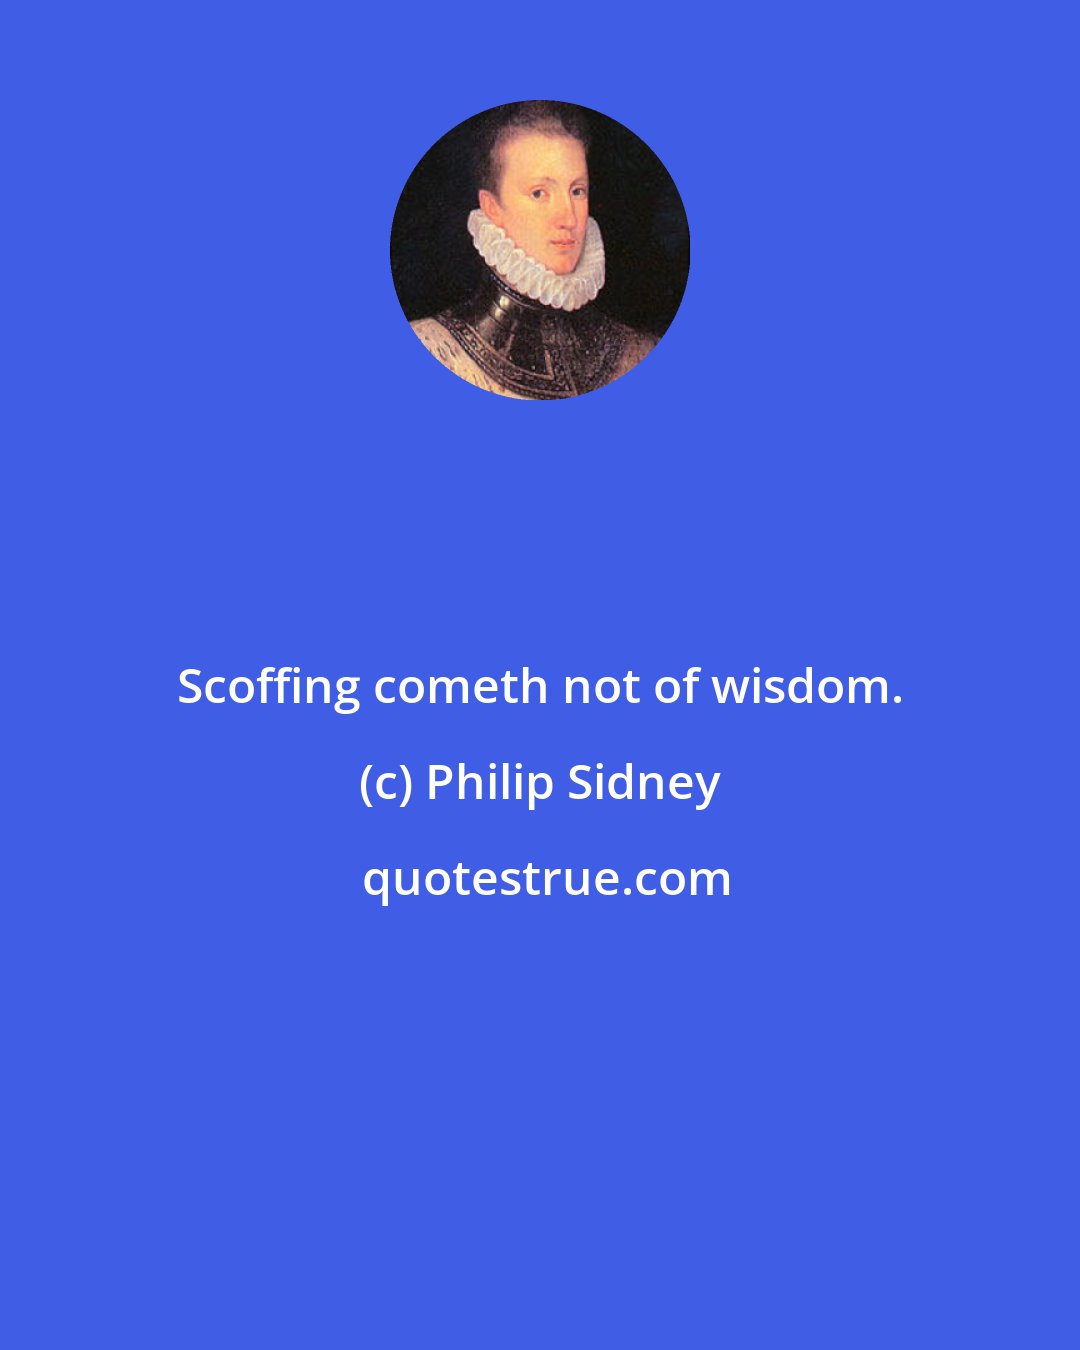 Philip Sidney: Scoffing cometh not of wisdom.